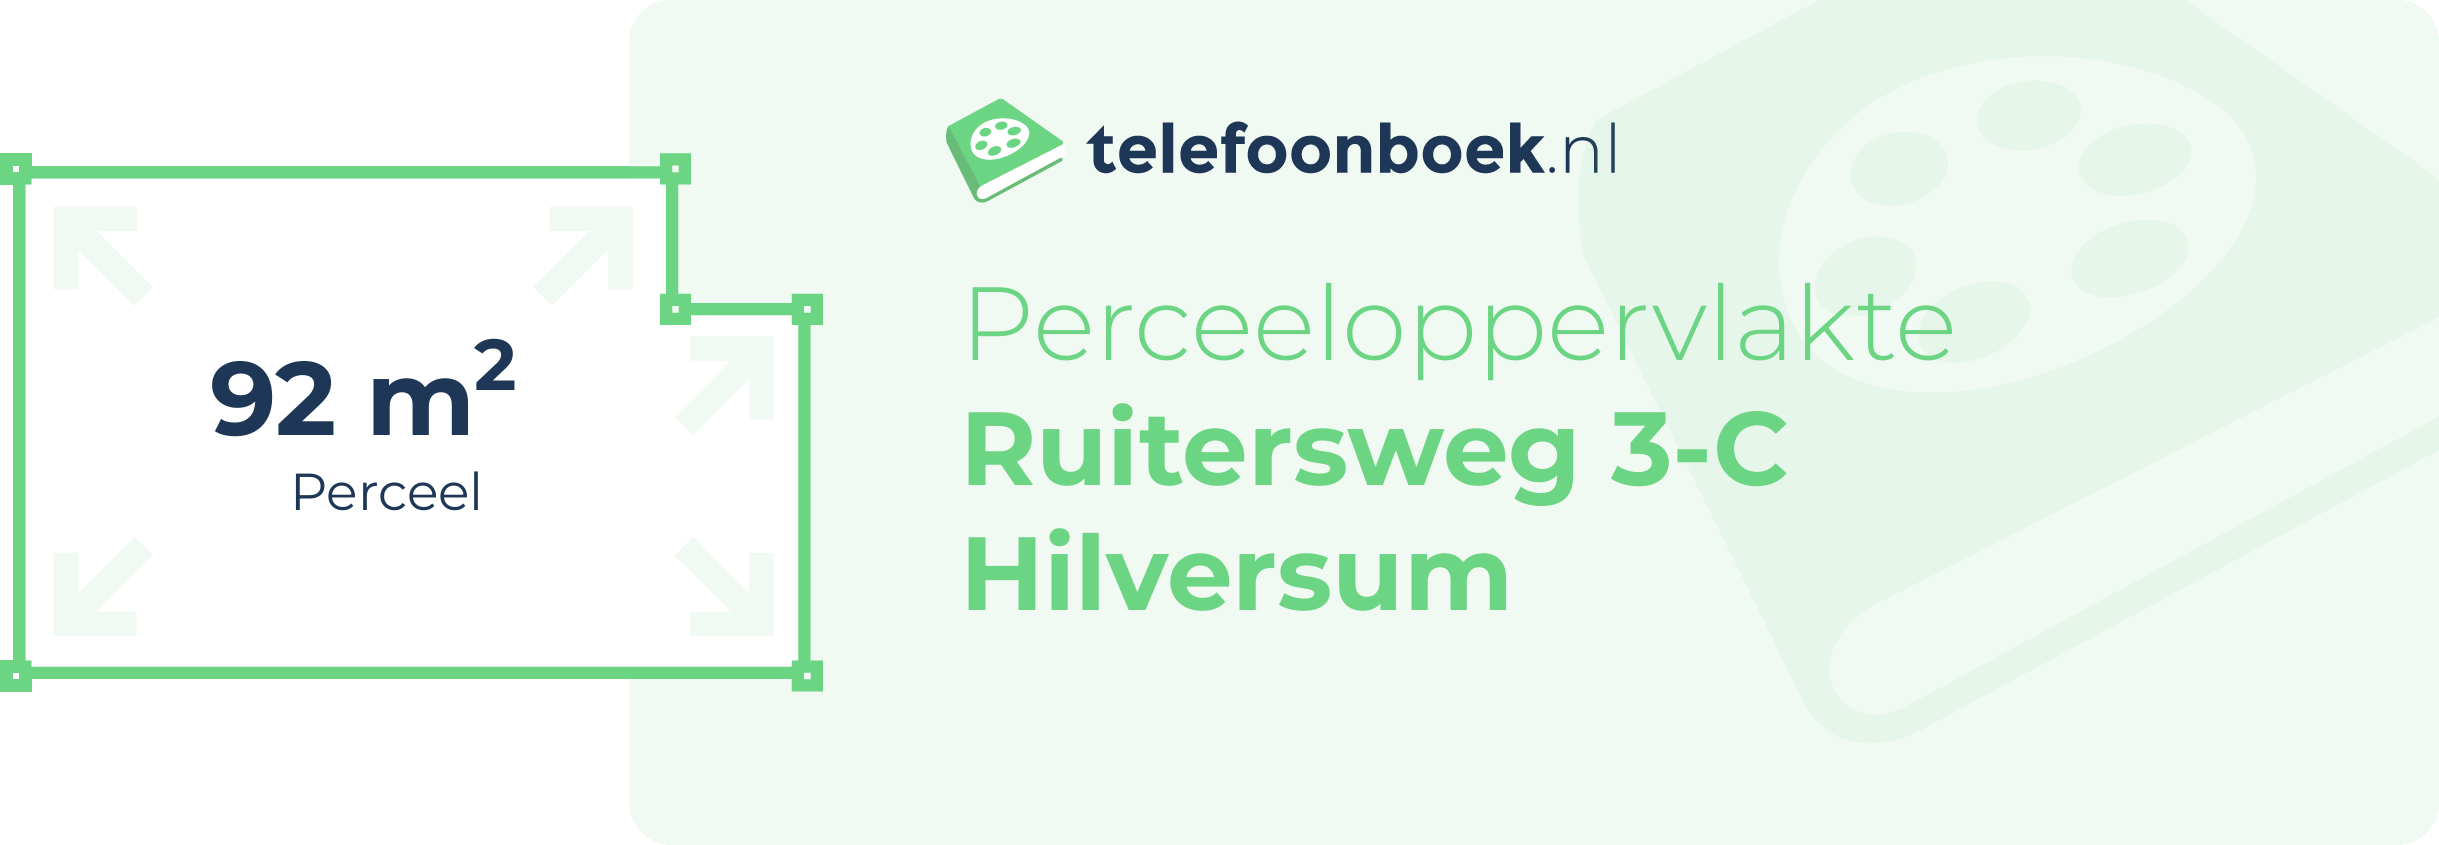 Perceeloppervlakte Ruitersweg 3-C Hilversum